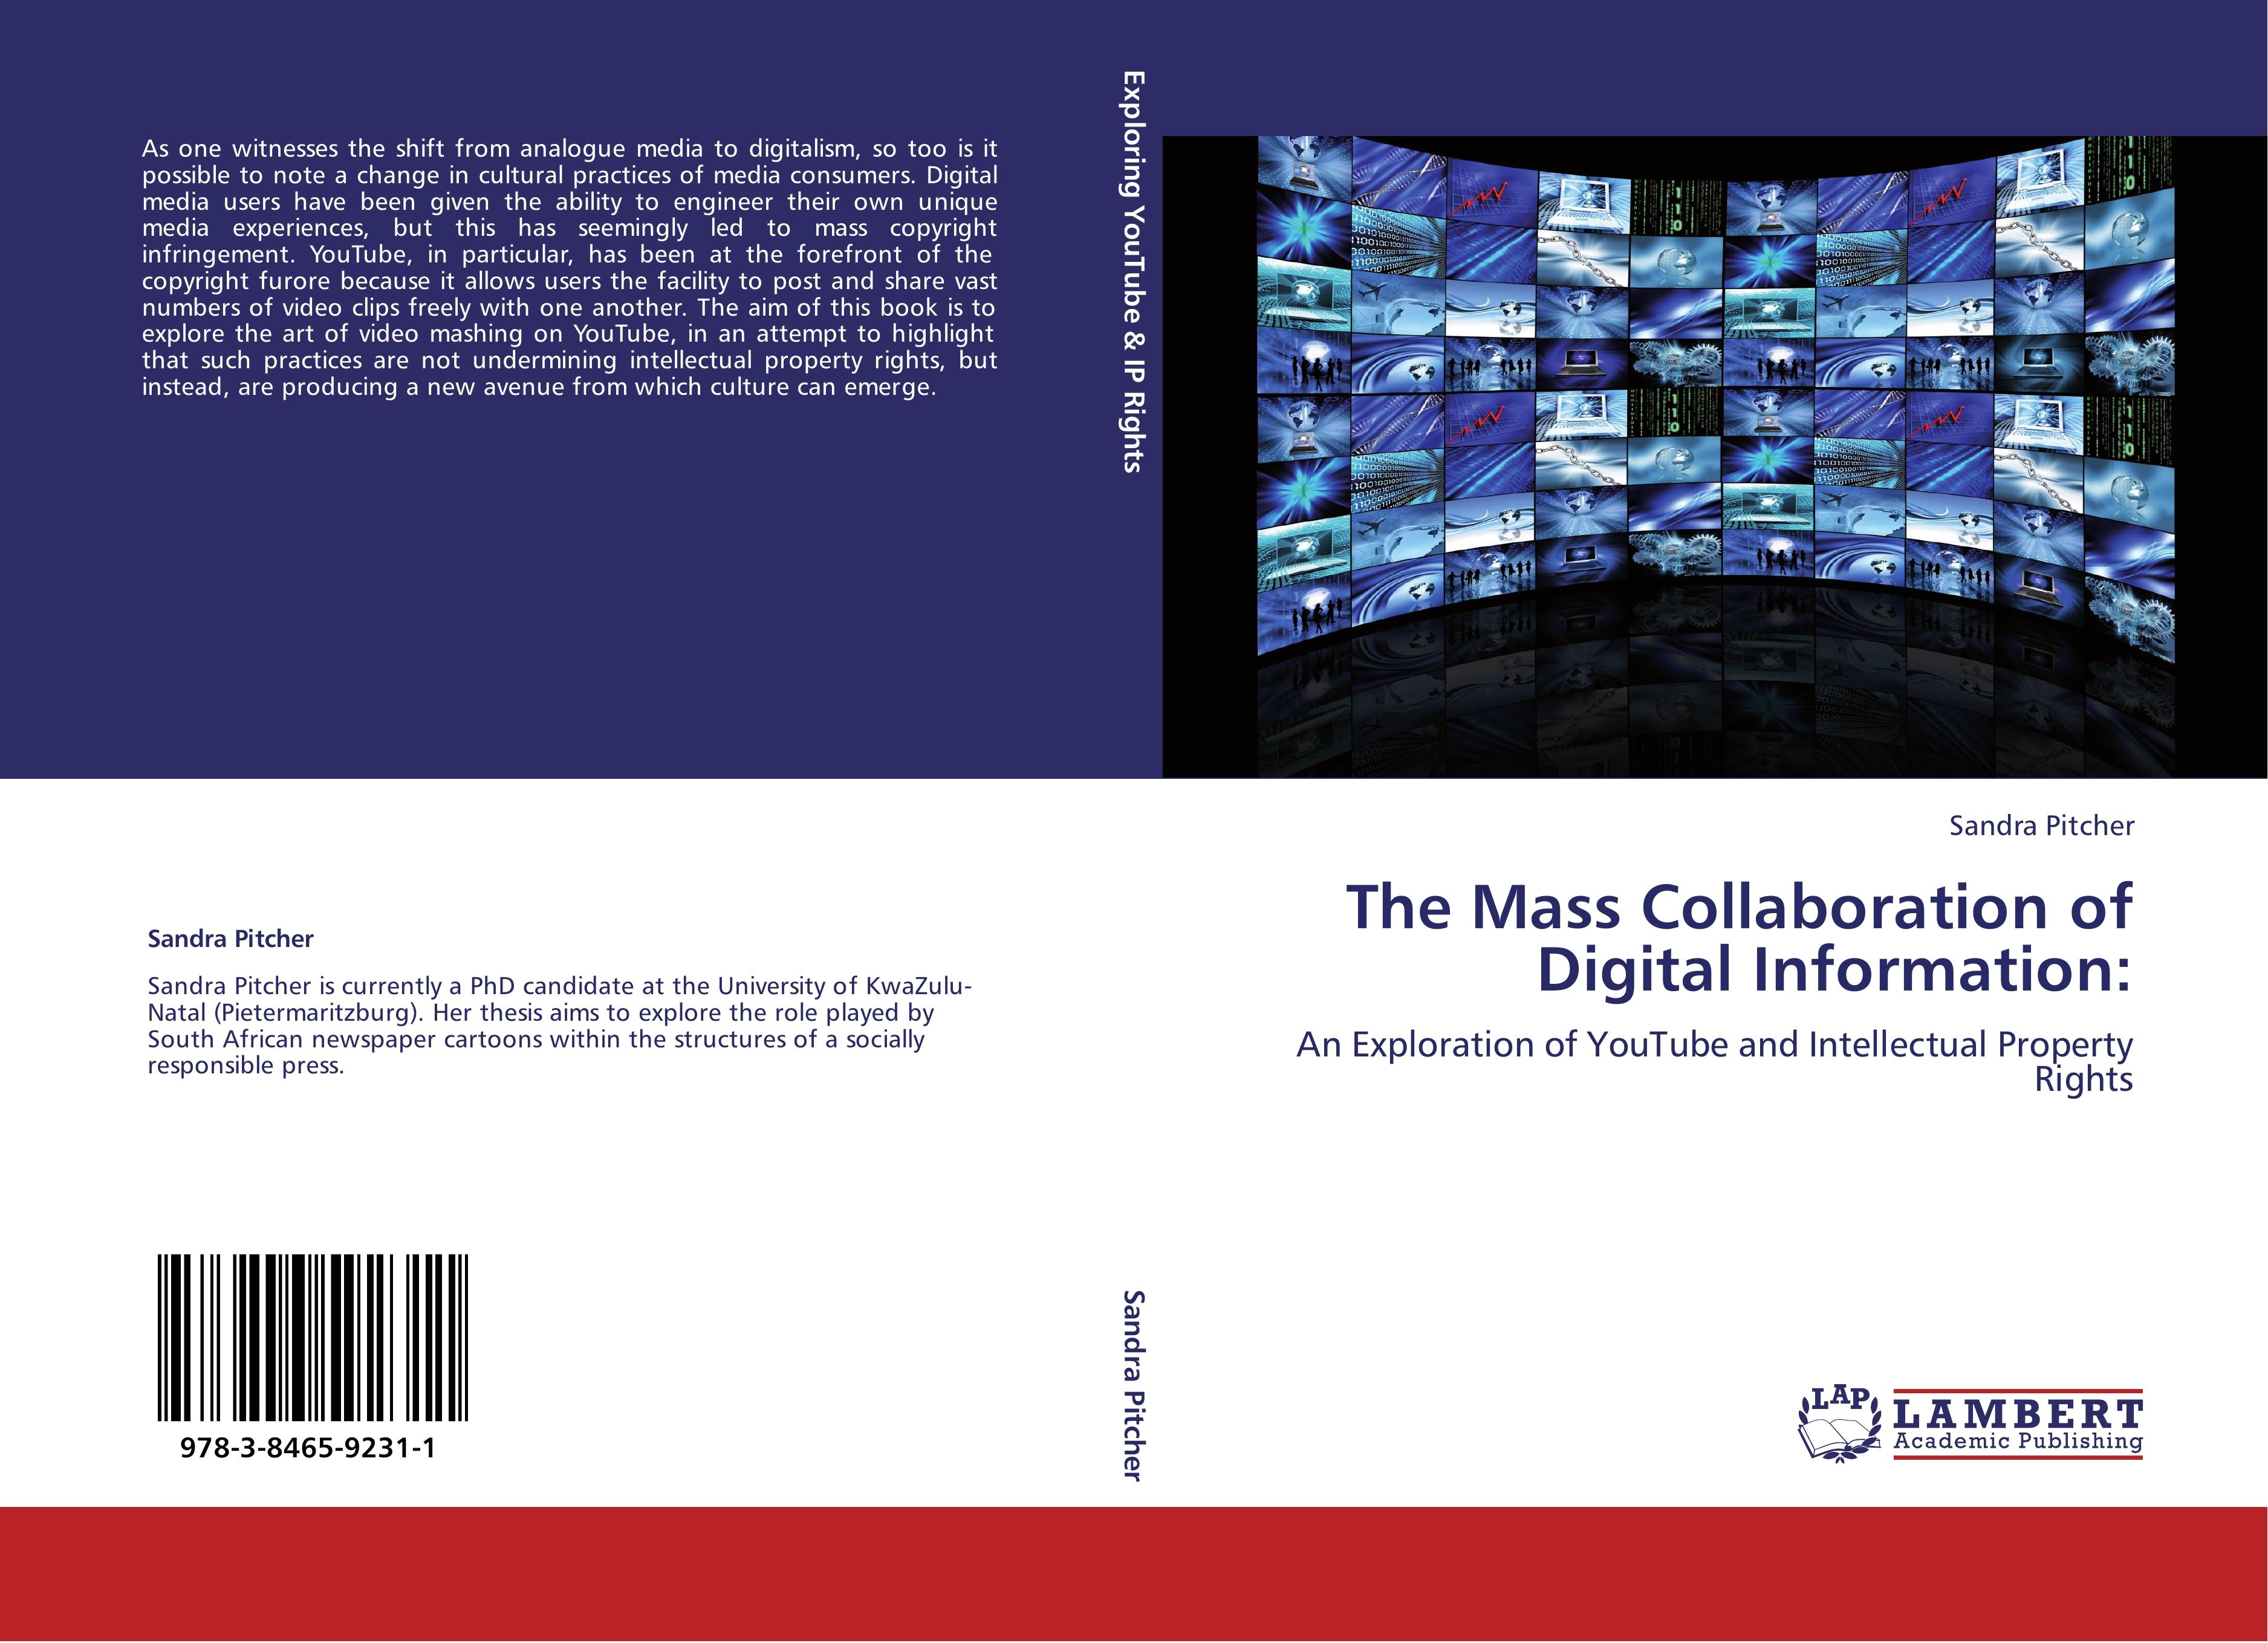 The Mass Collaboration of Digital Information - Sandra Pitcher